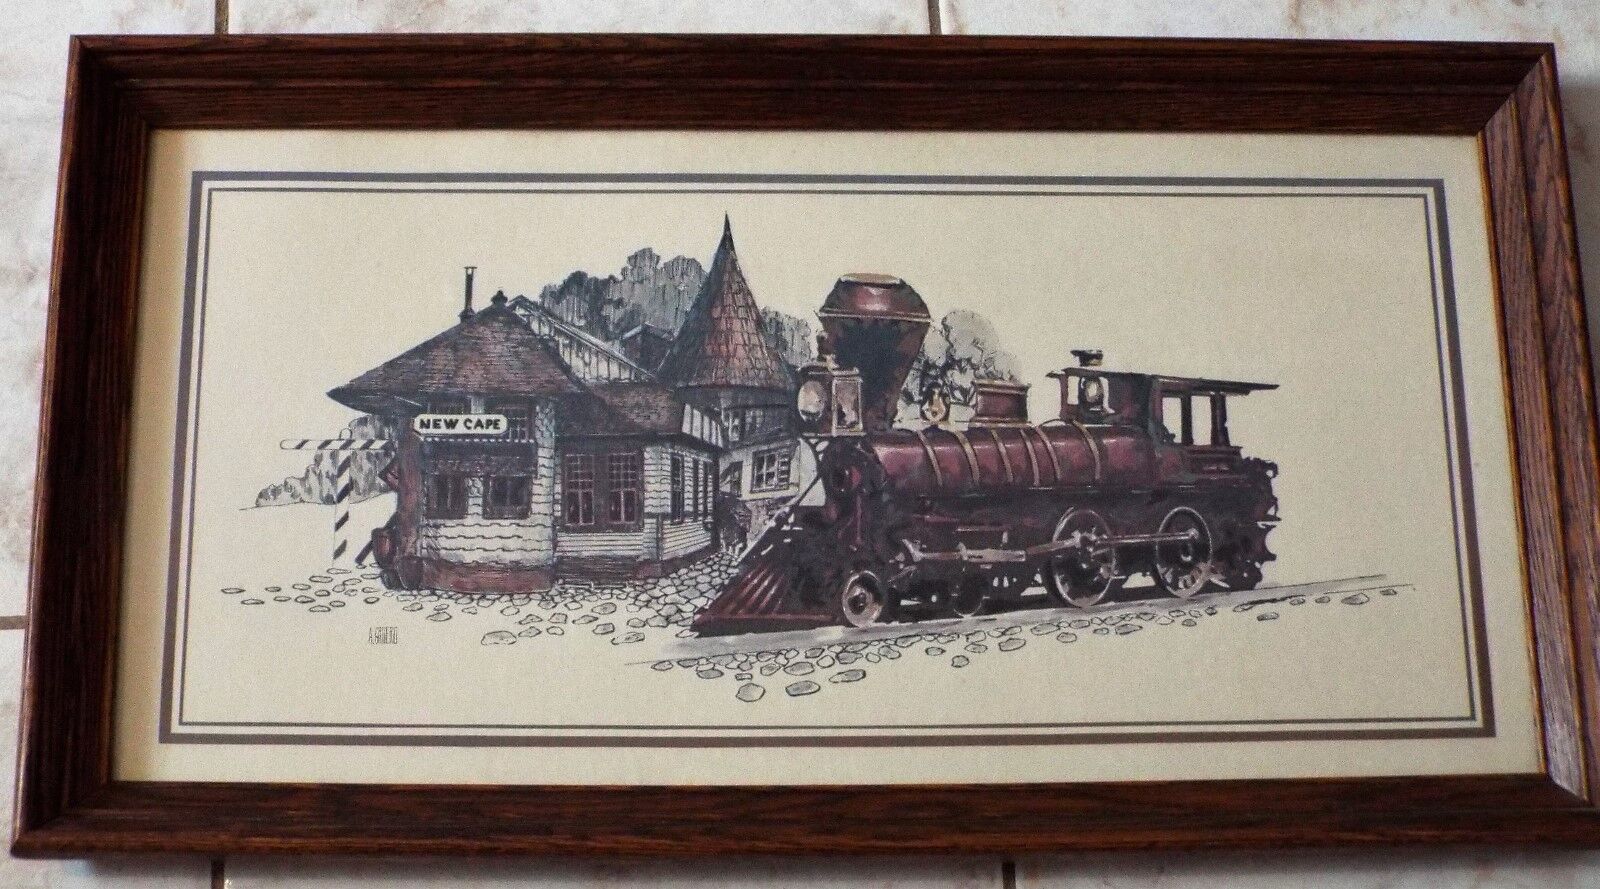 Rare Vintage Ethan Allen Train New Cape Art Framed Print by A. Gruerio.26x14 